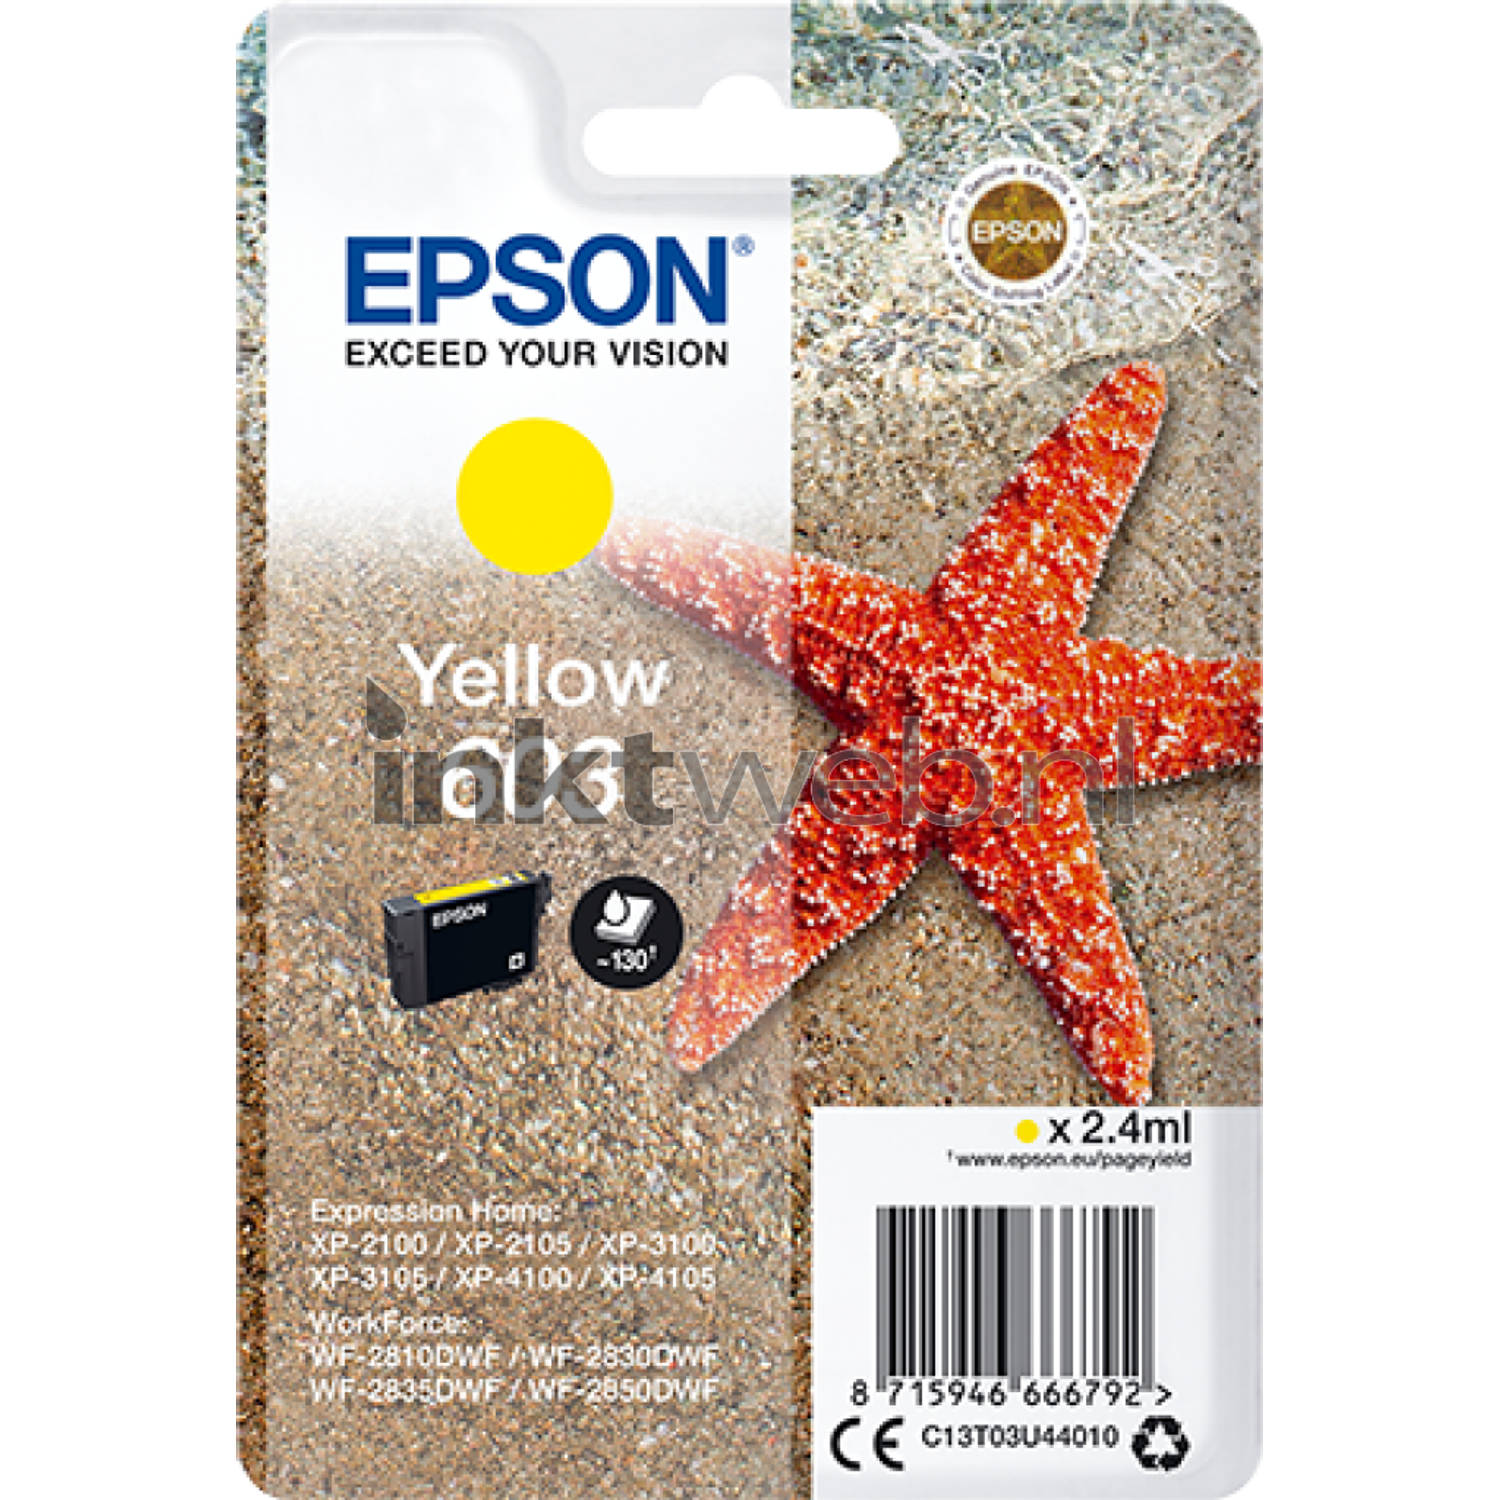 Epson 603 geel cartridge